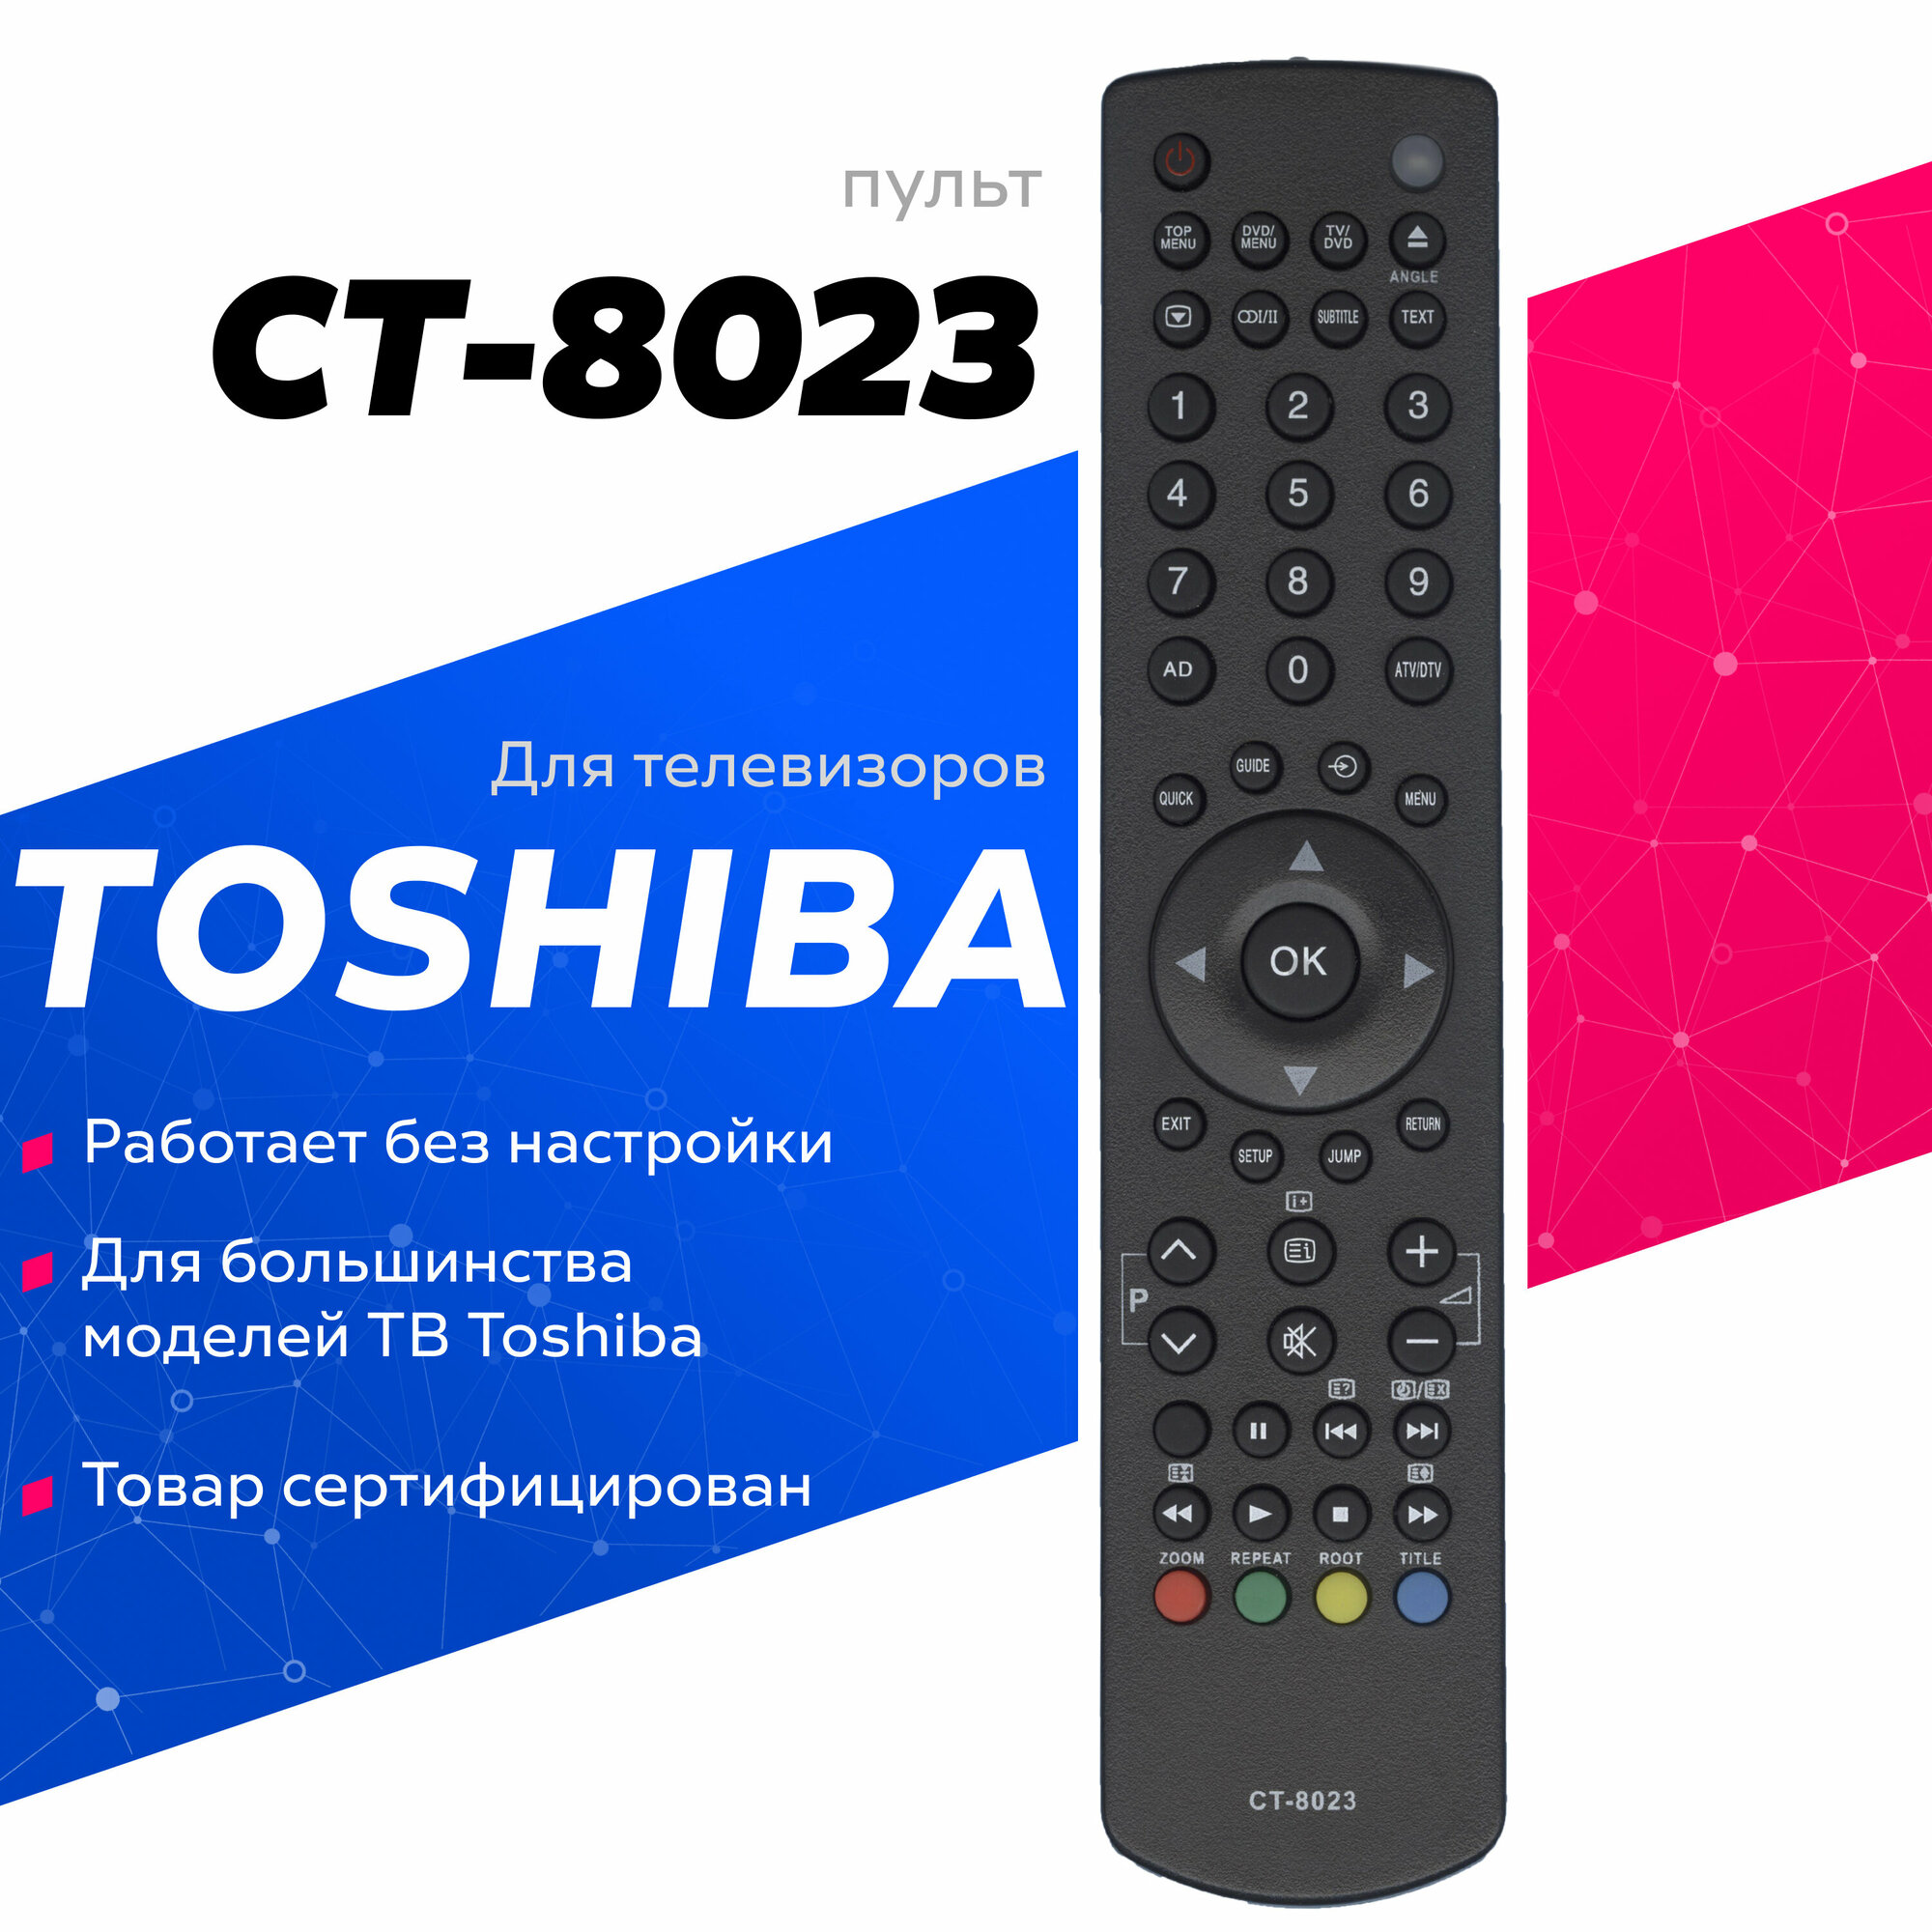 Пульт Huayu CT-8023 для телевизоров Tоshiba